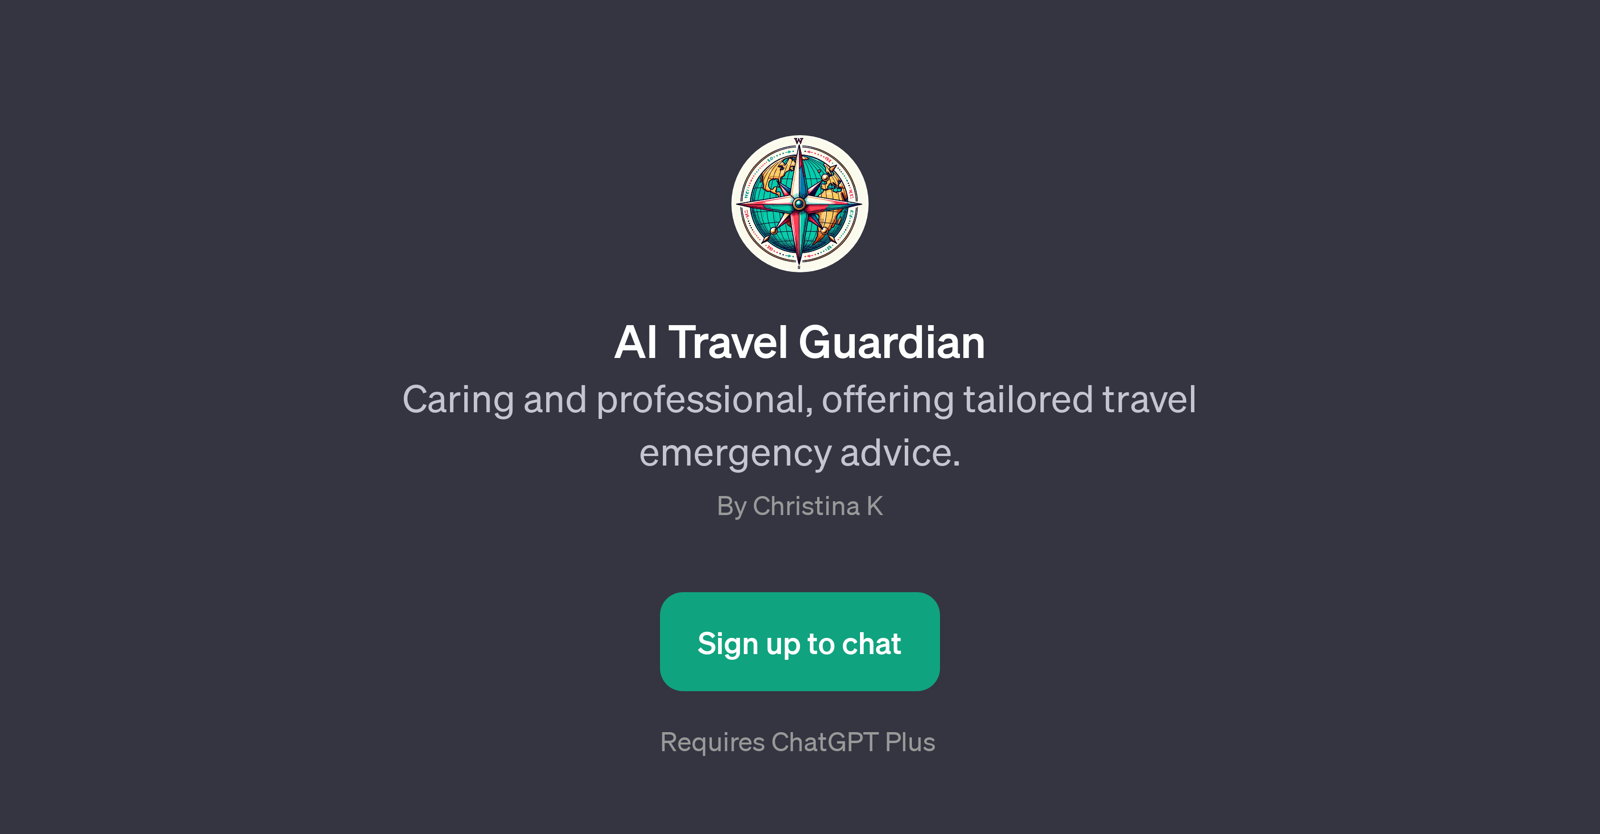 AI Travel Guardian website